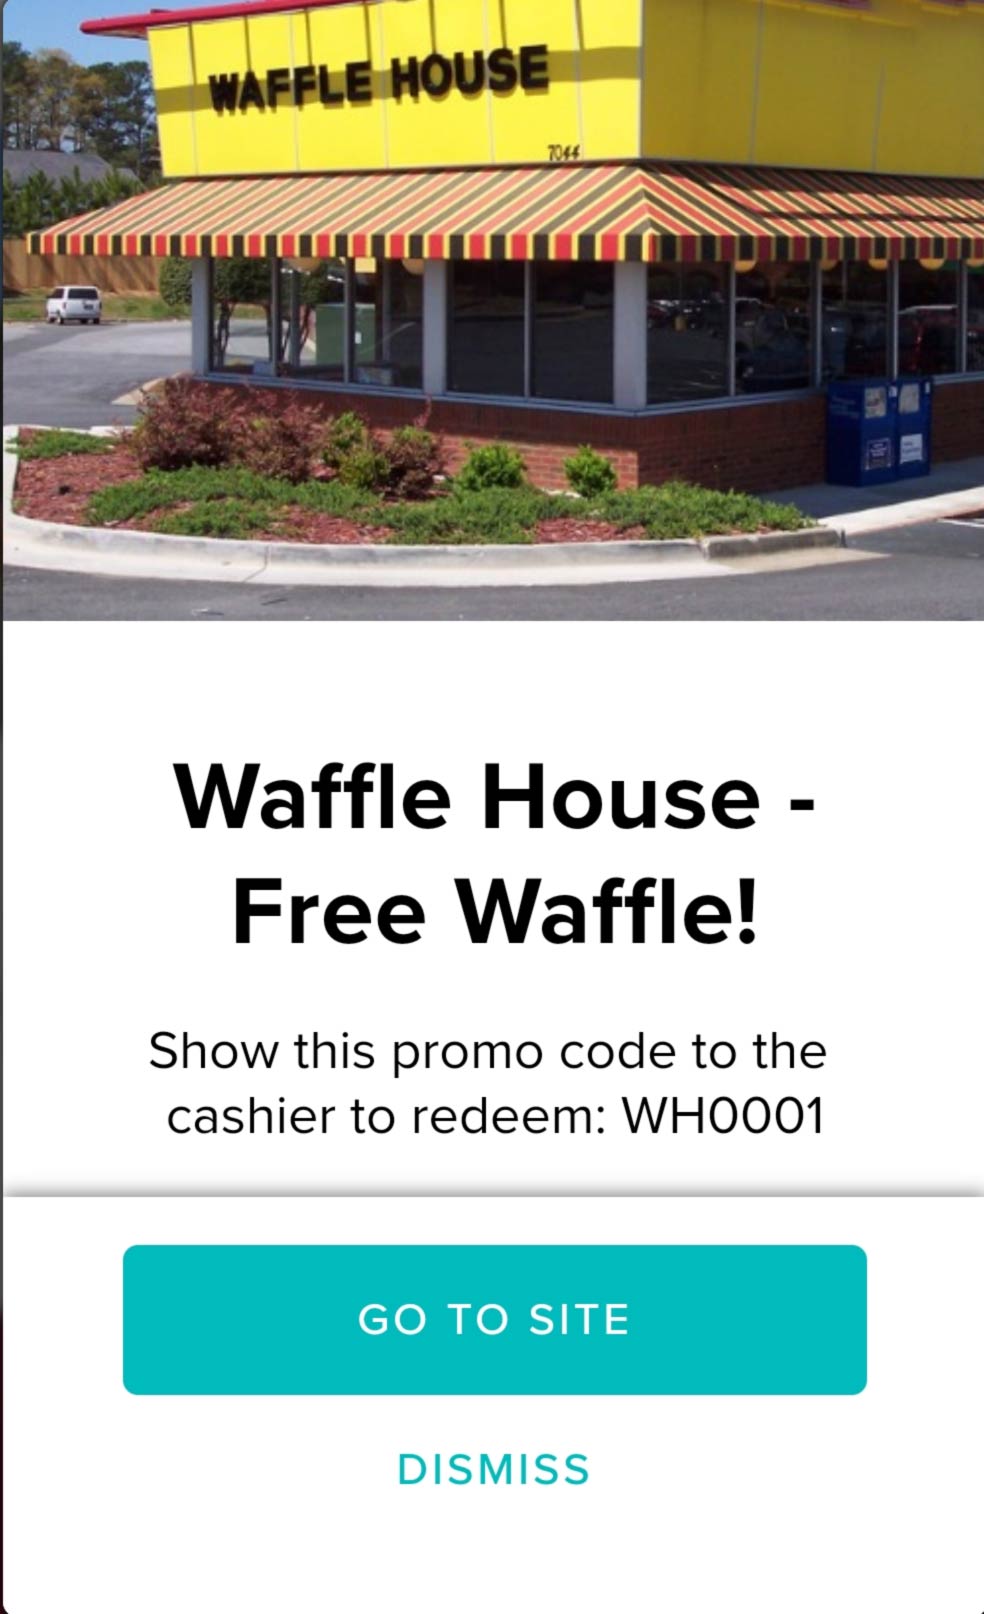 [April, 2022] Free waffle at Waffle House restaurants wafflehouse